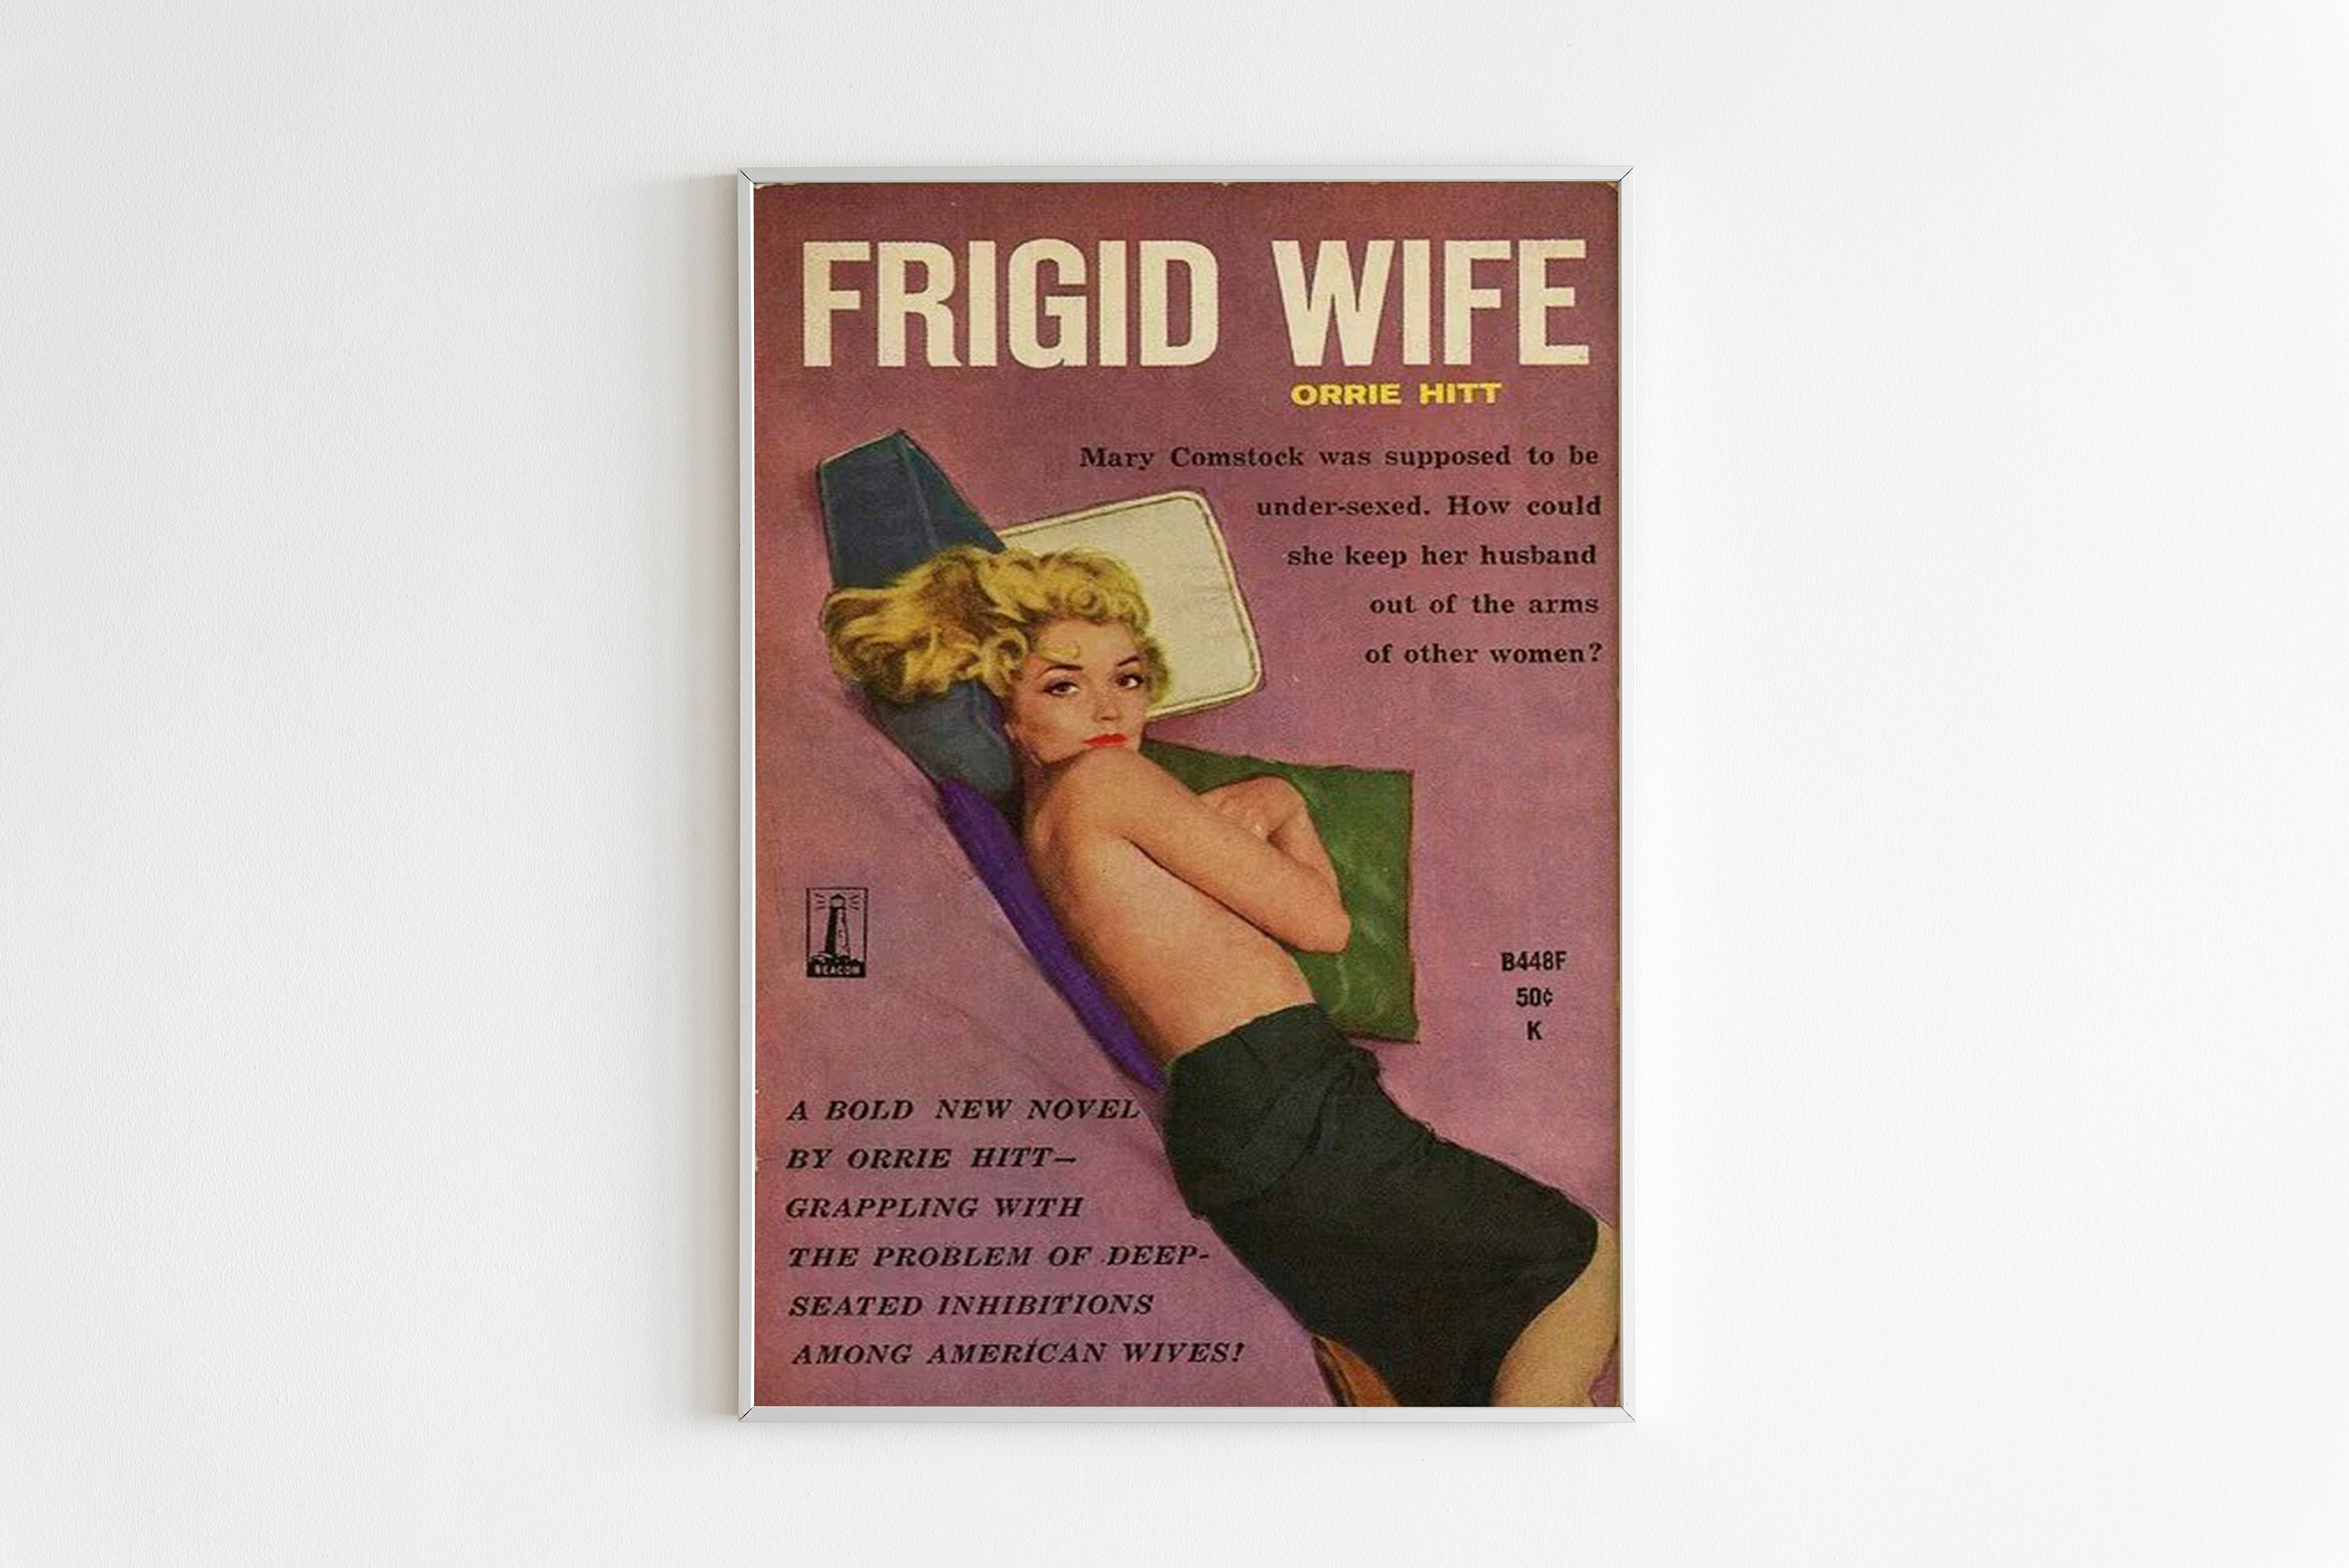 Frigid Wife image